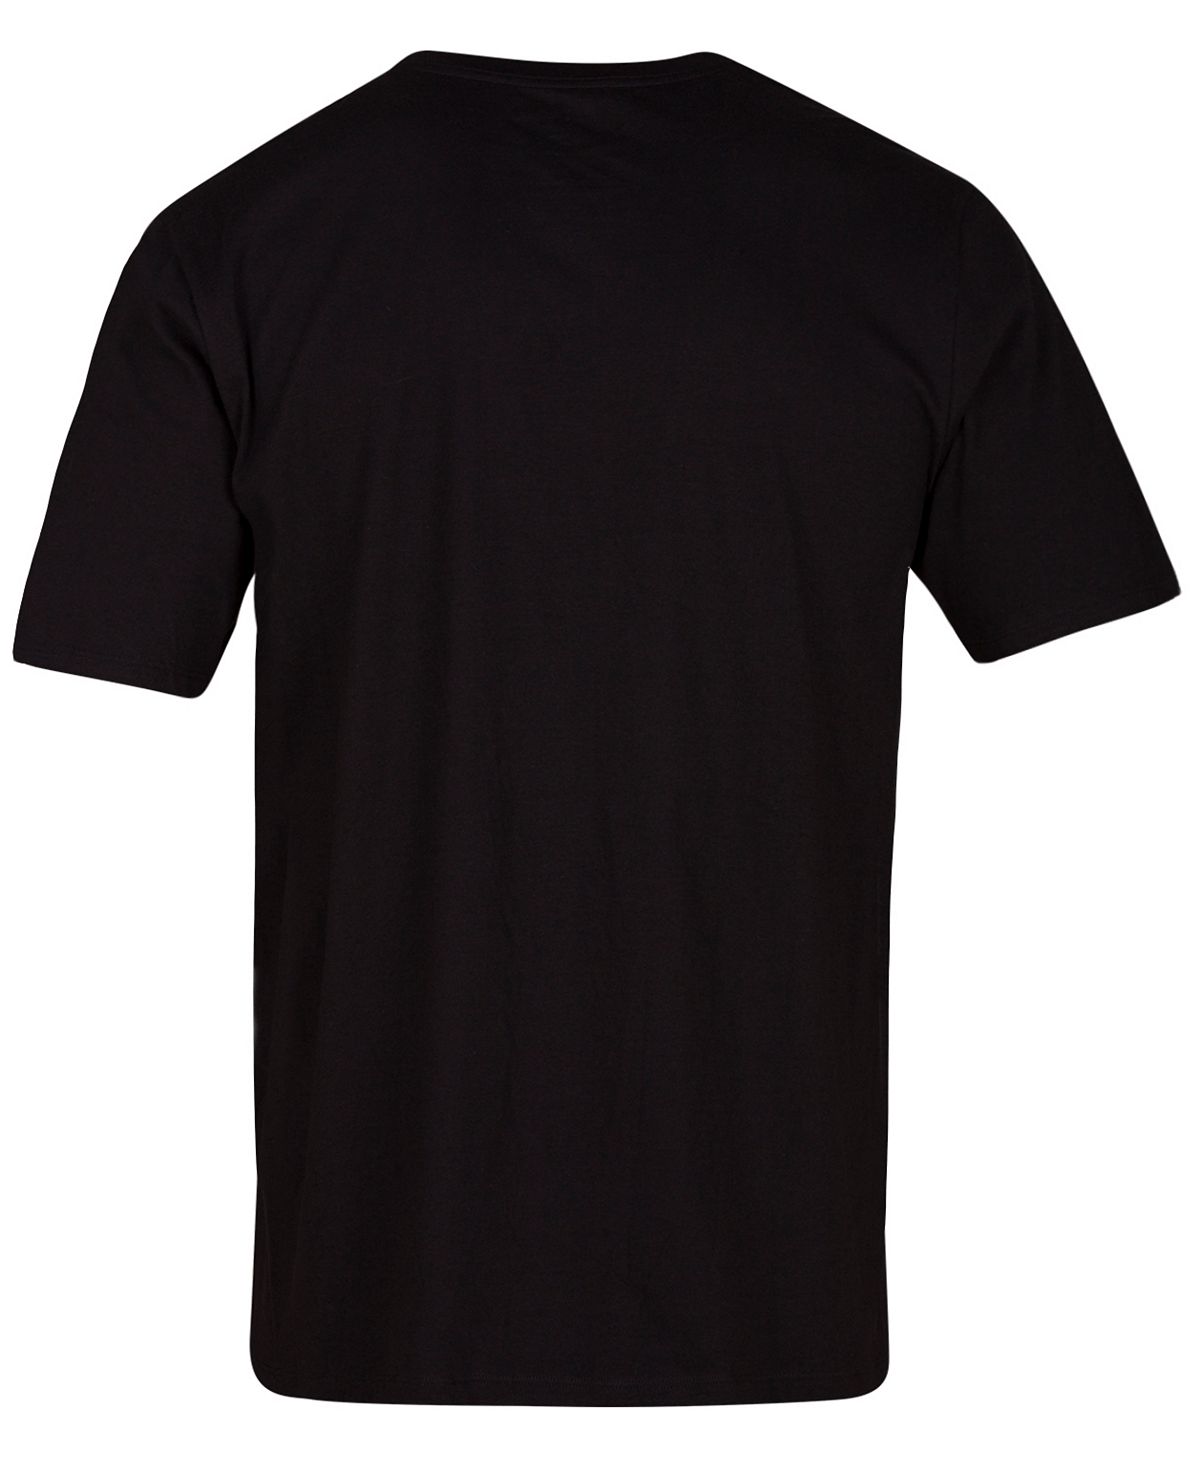 Hurley High Bars Graphic T-shirt Black